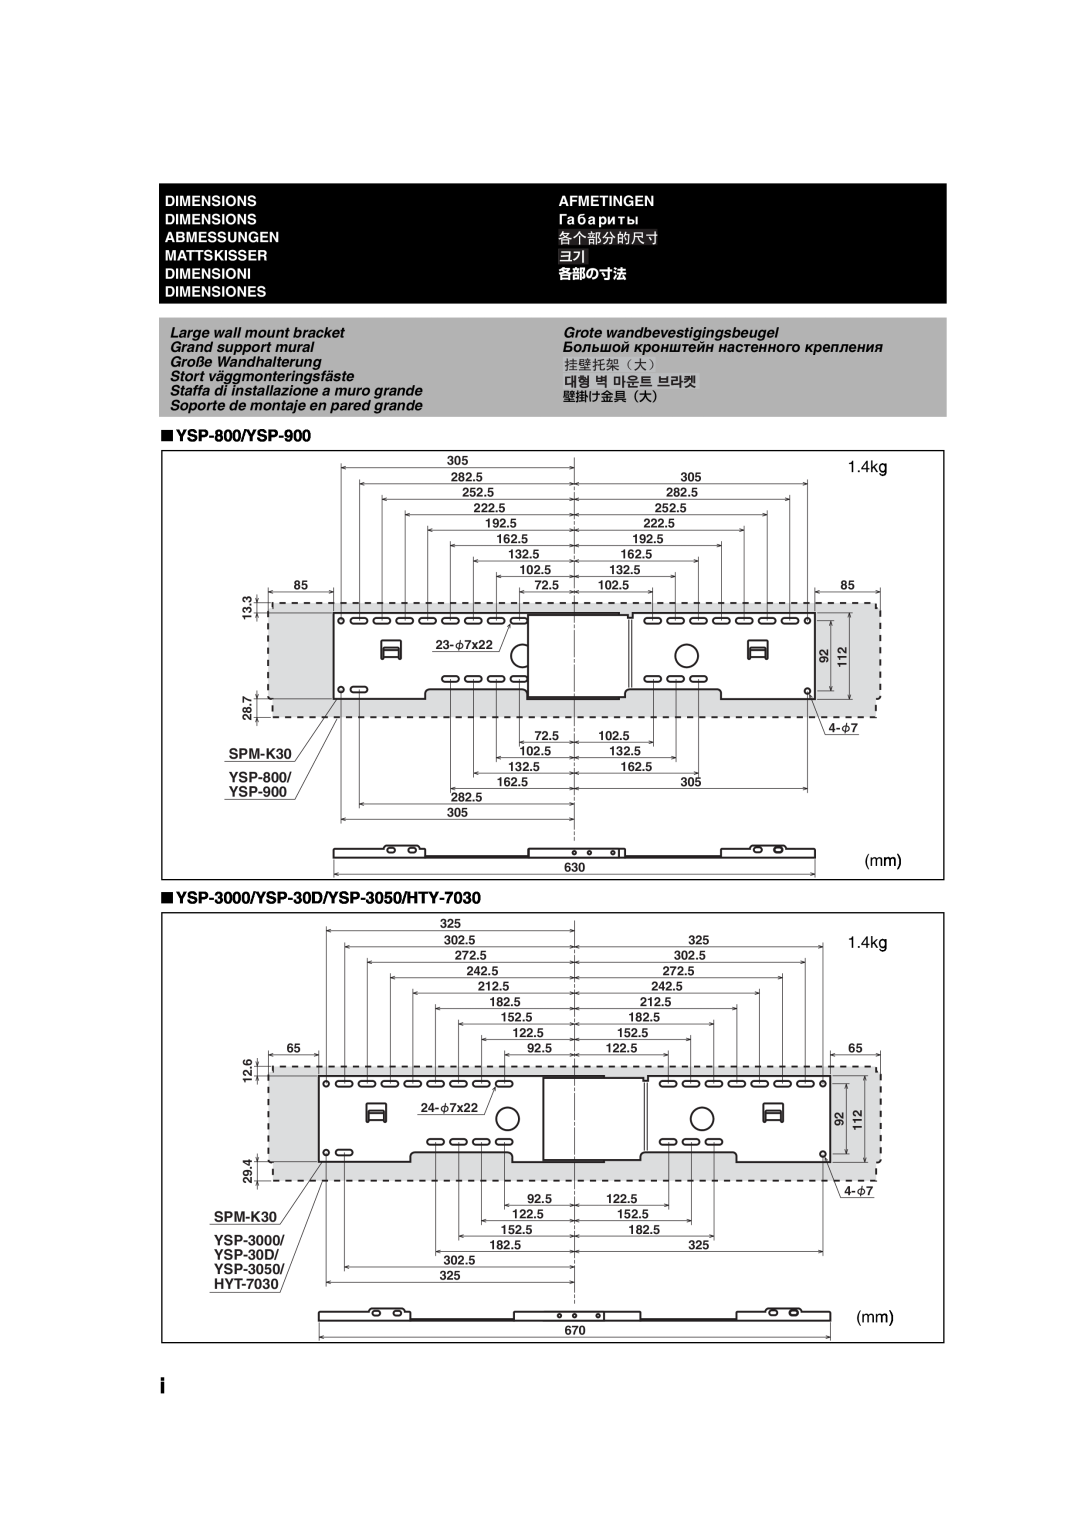 Yamaha SPMK30 Dimensions Dimensions Abmessungen Mattskisser, Dimensioni Dimensiones, Afmetingen, Га ба риты, SPM-K30 